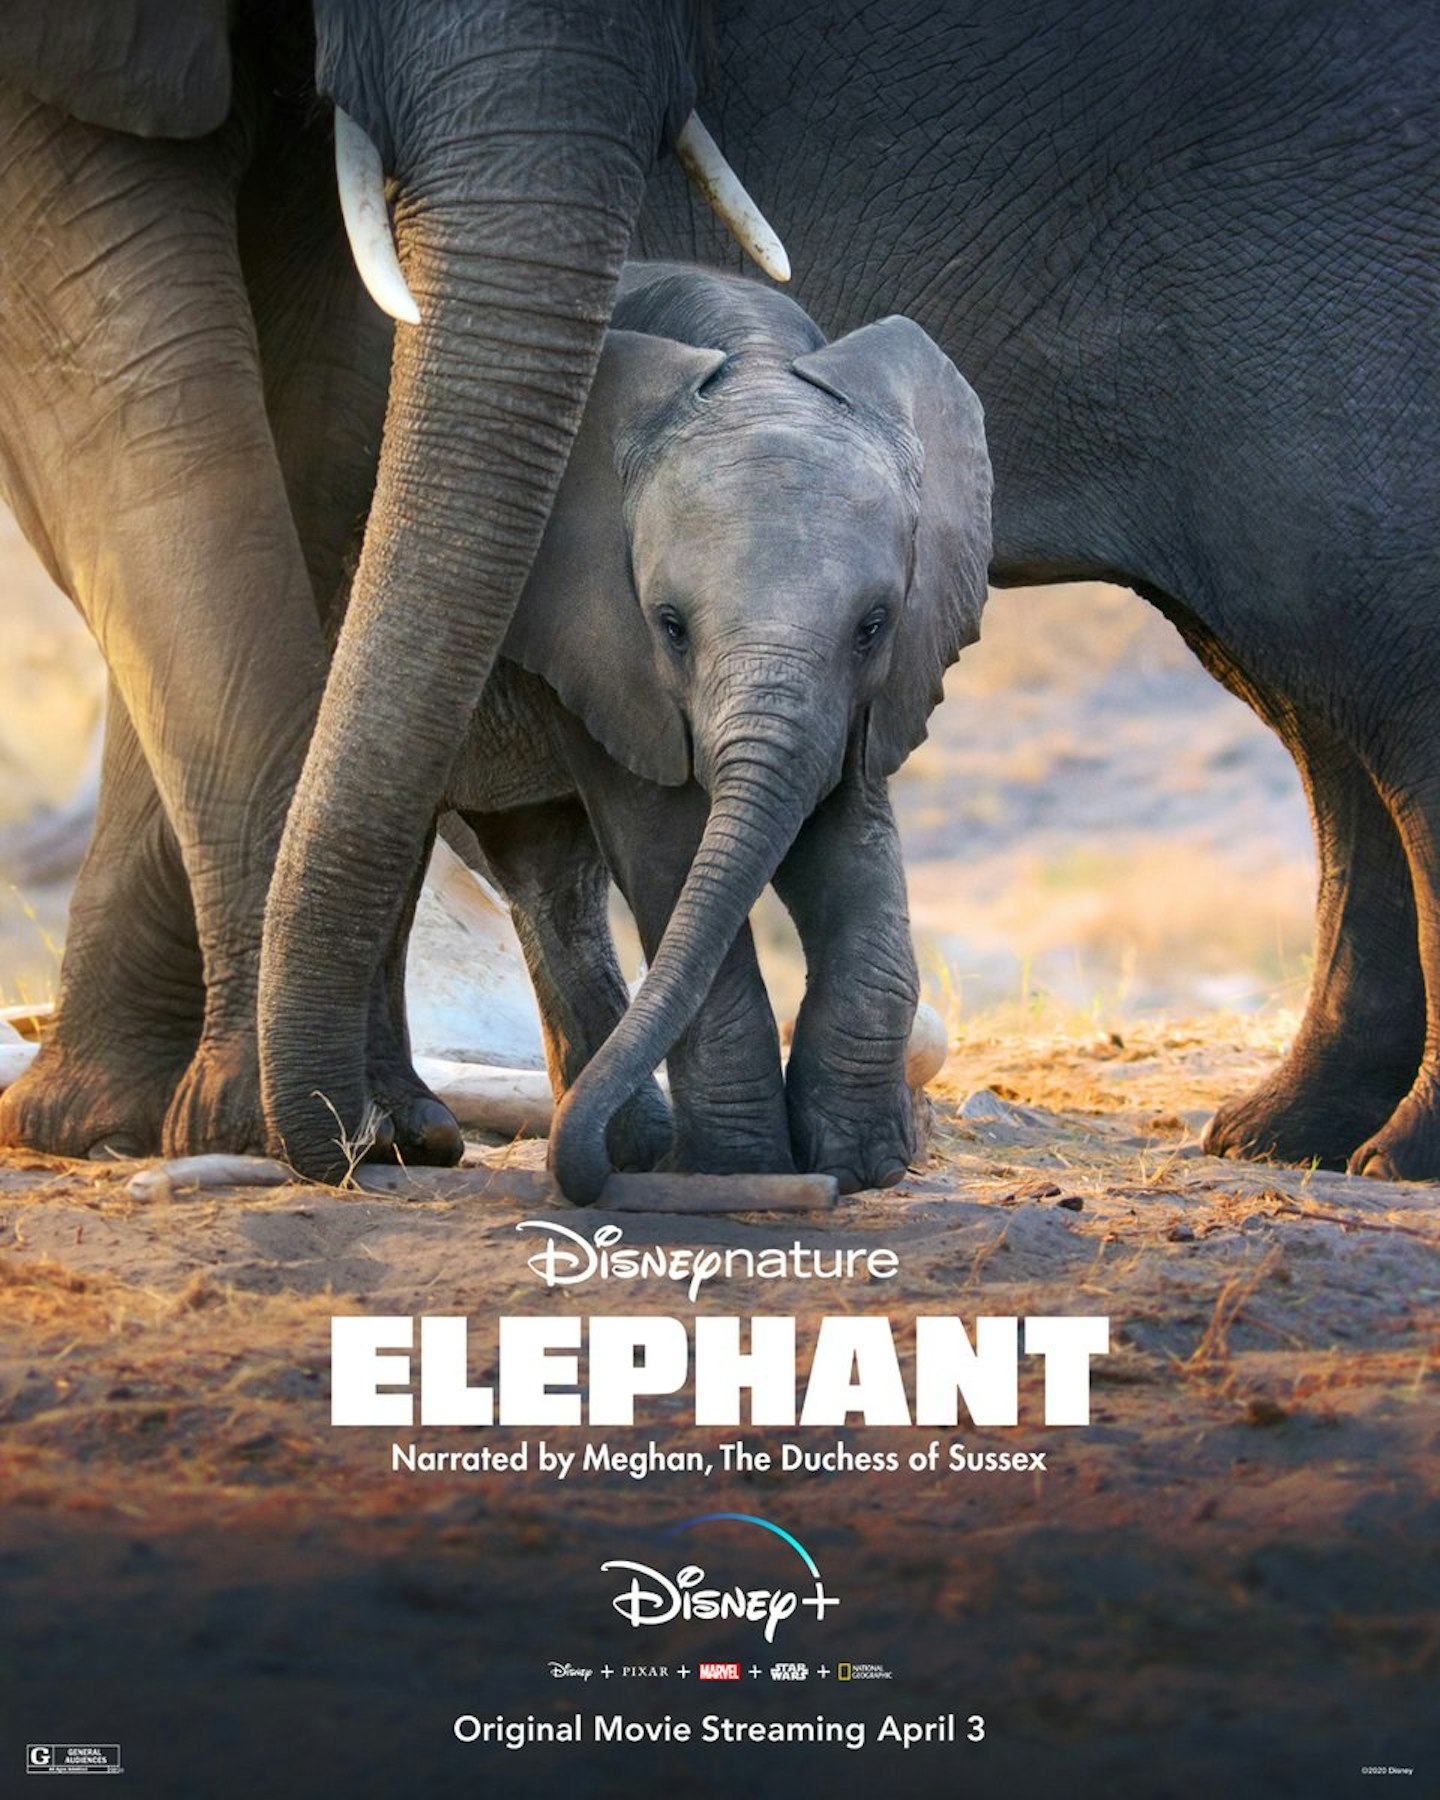 Elephant will stream on Disney+ 